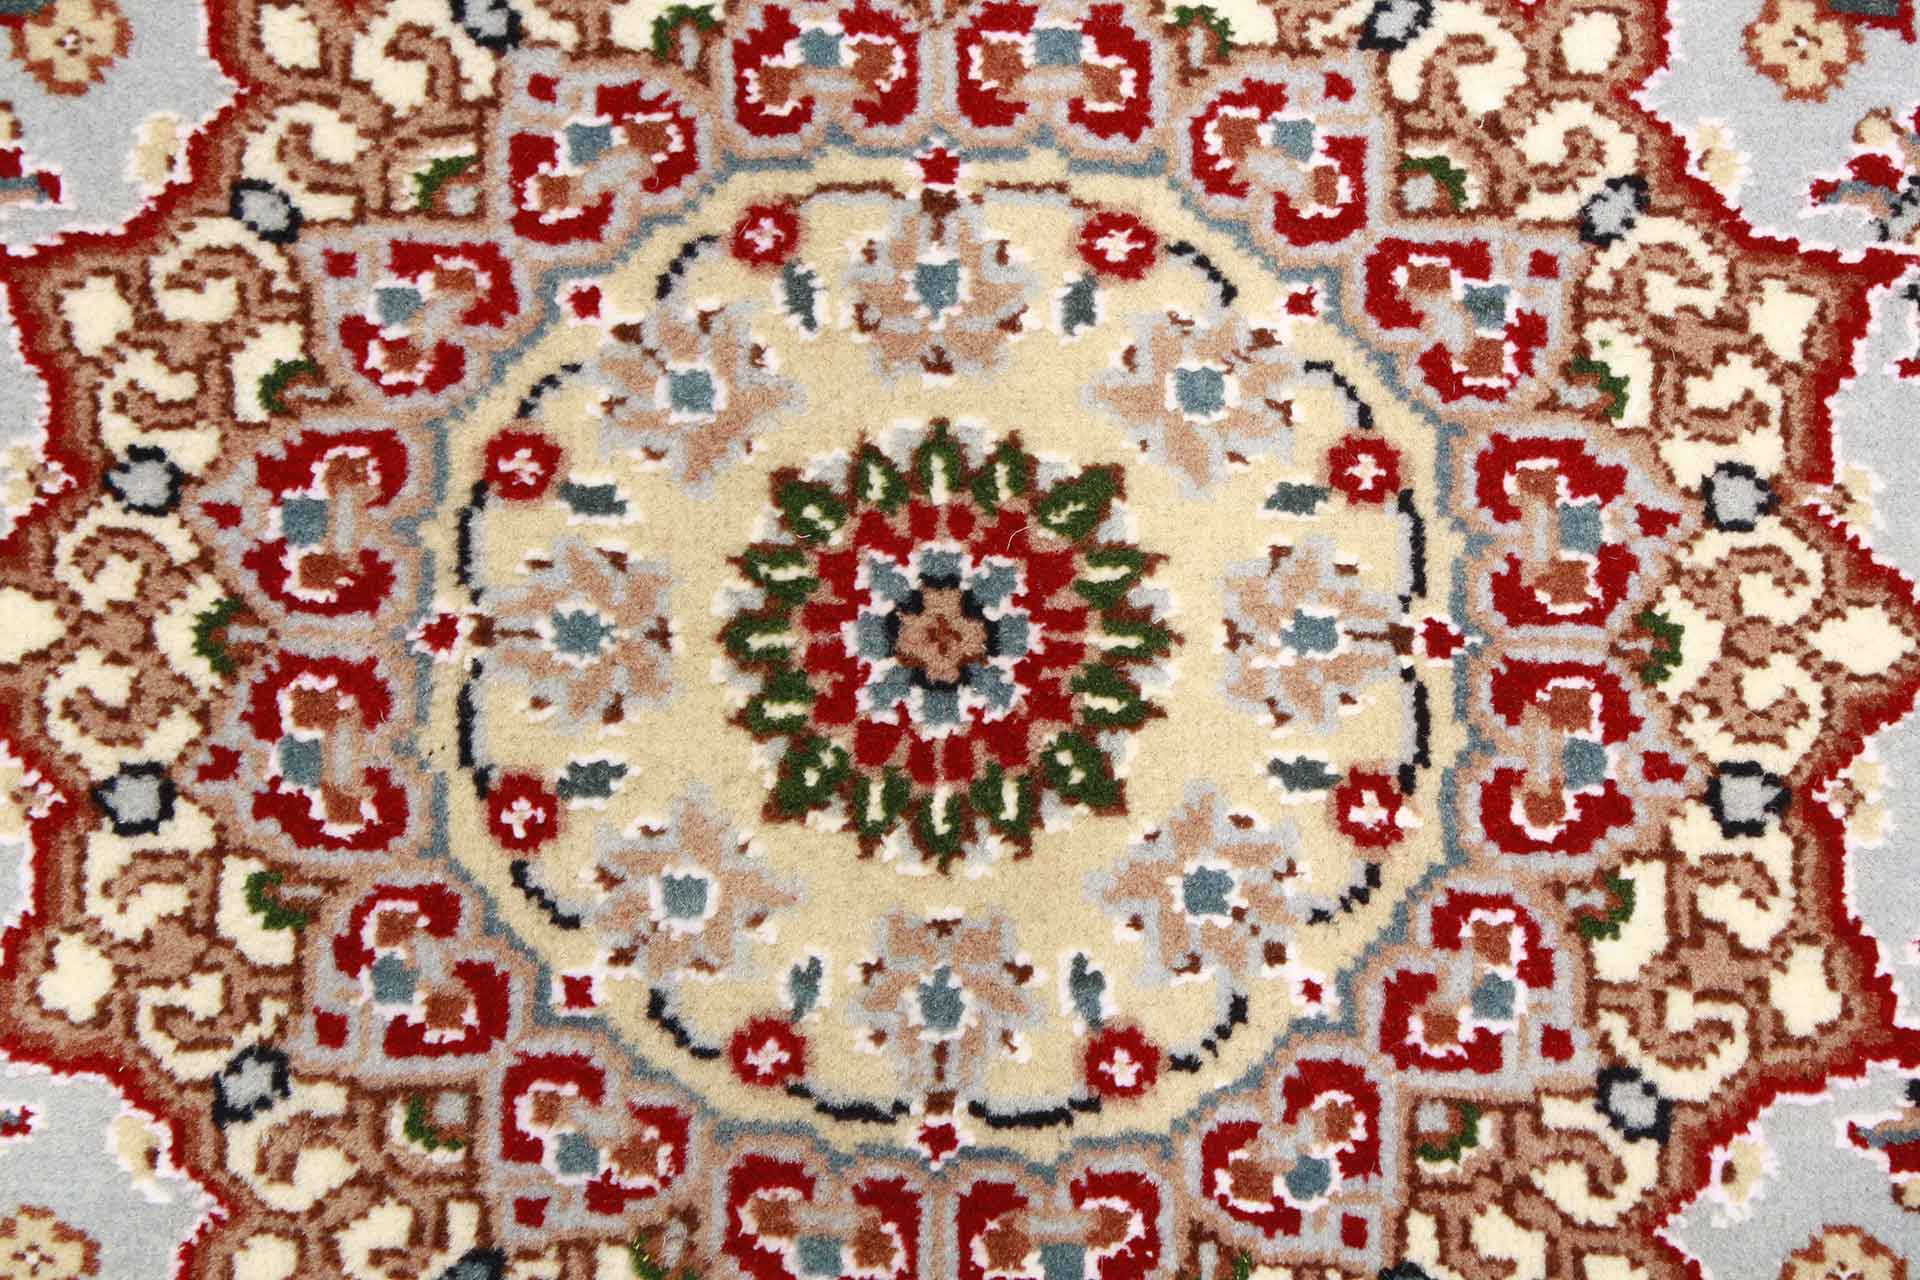 Perský koberec Nain Exkluziv